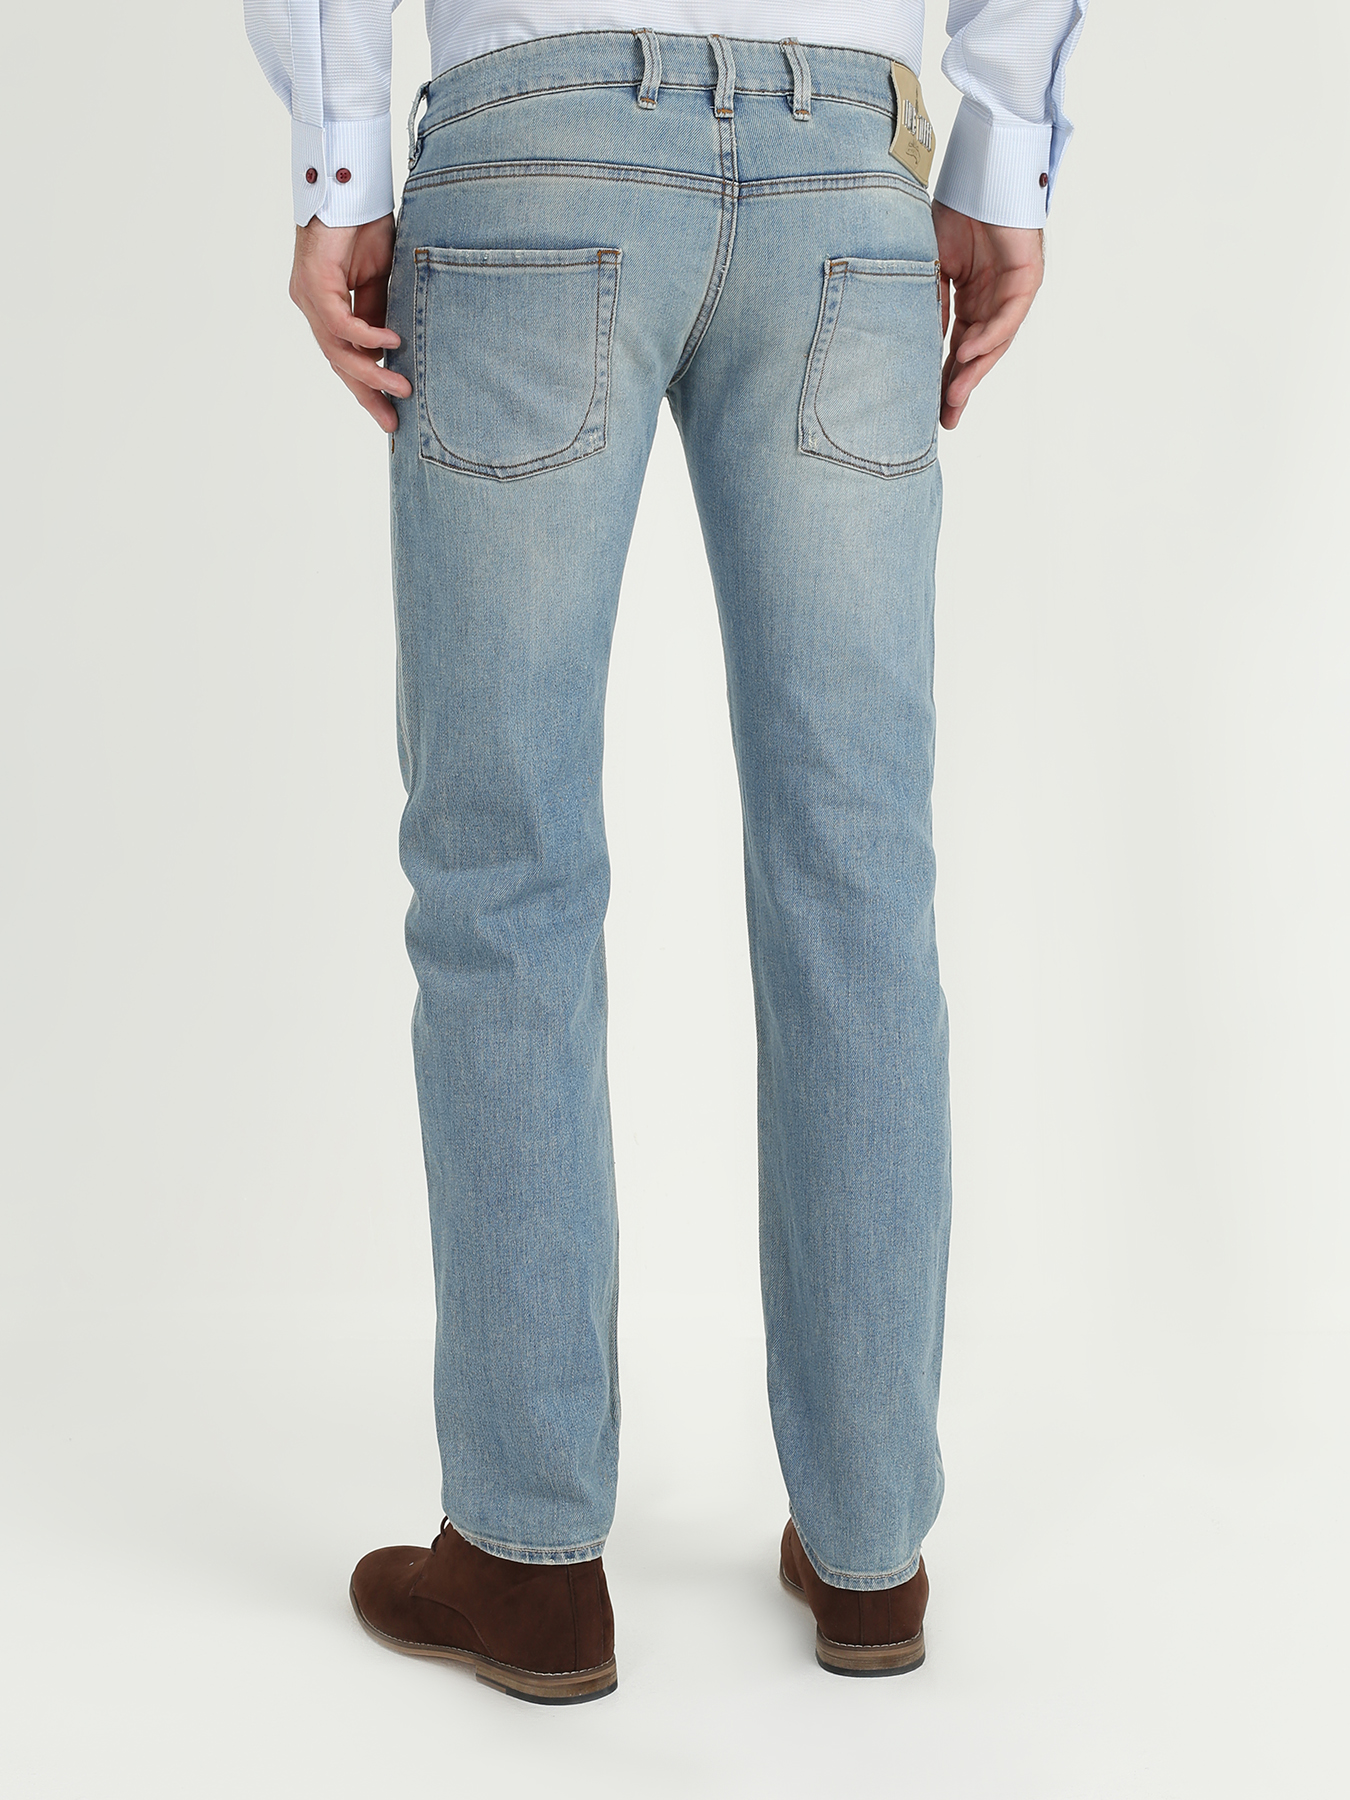 Finisterre Узкие мужские джинсы 322284-018 Фото 2